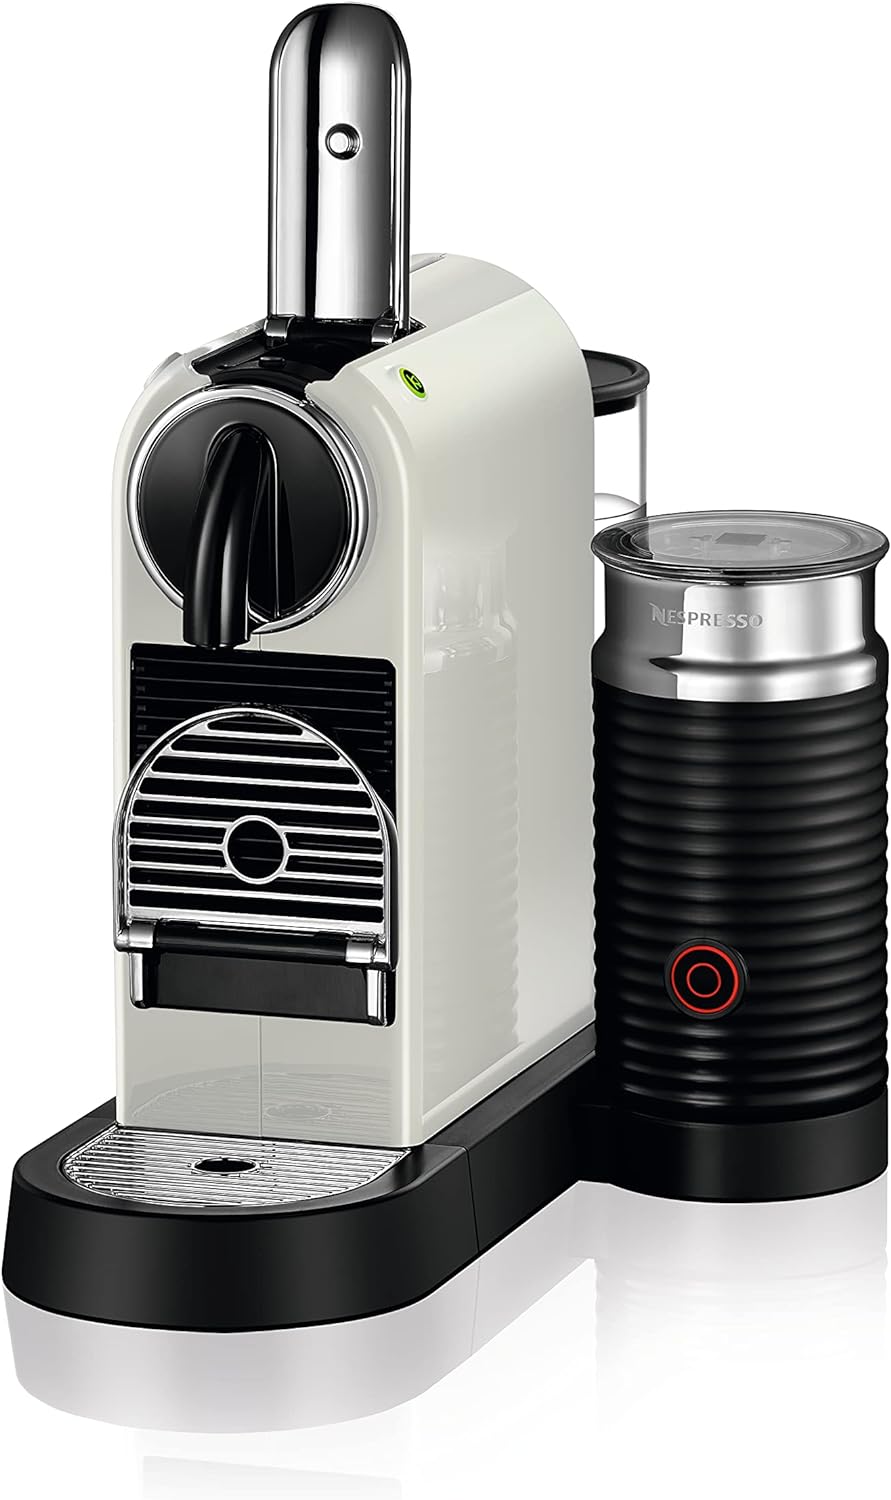 Magimix 11319 CitiZ and Milk Nespresso Coffee Machine - White